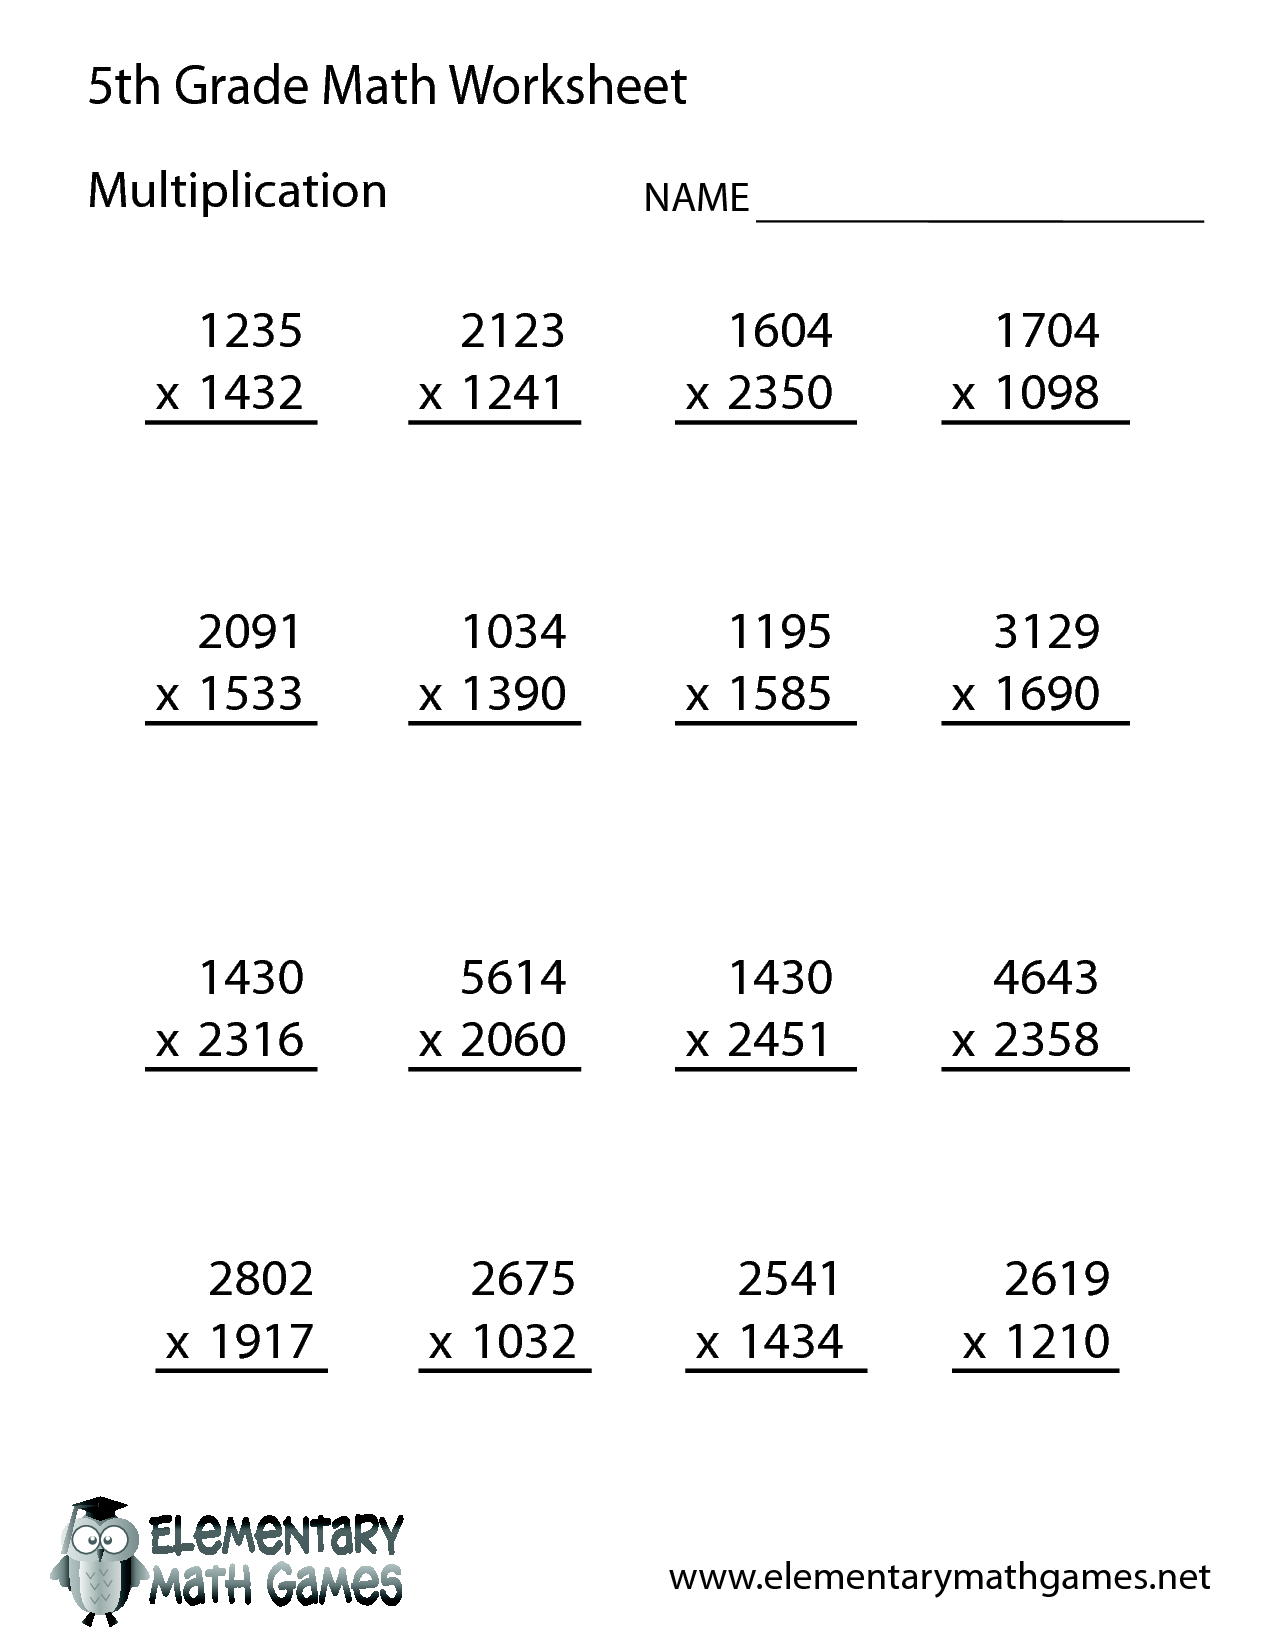 5th Grade Math Worksheets Multiplication